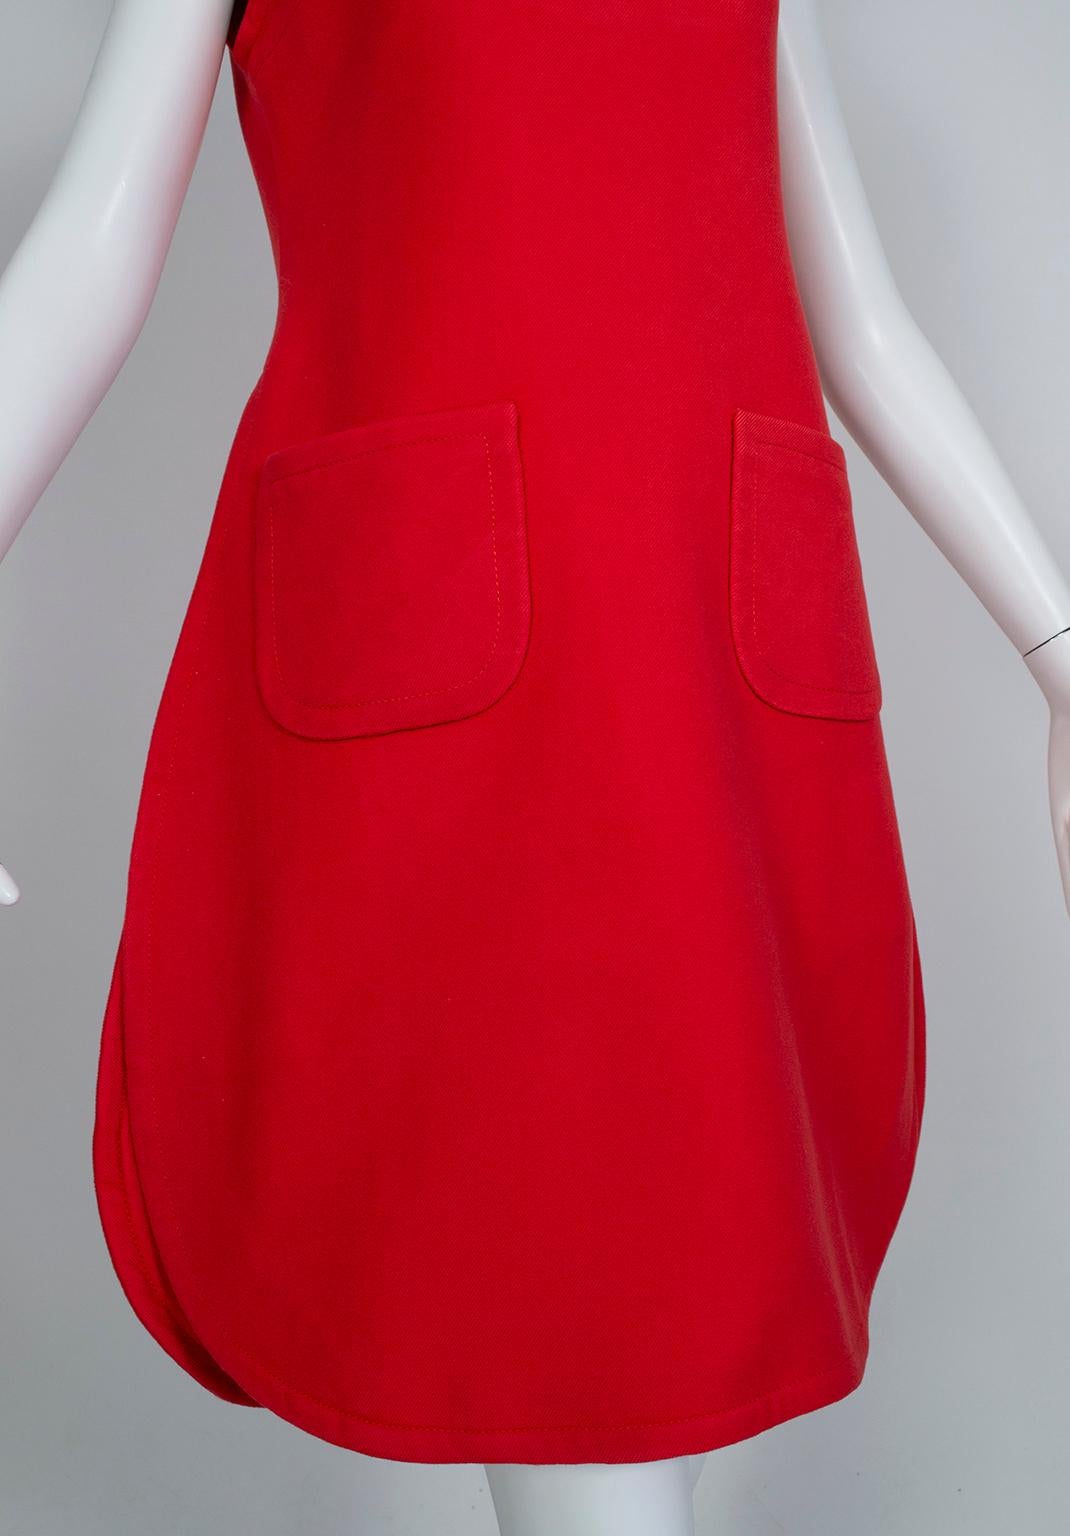 Red Space-Age Pierre Cardin Prototype Cutout Tabard Dress w Provenance-S-M, 1969 3